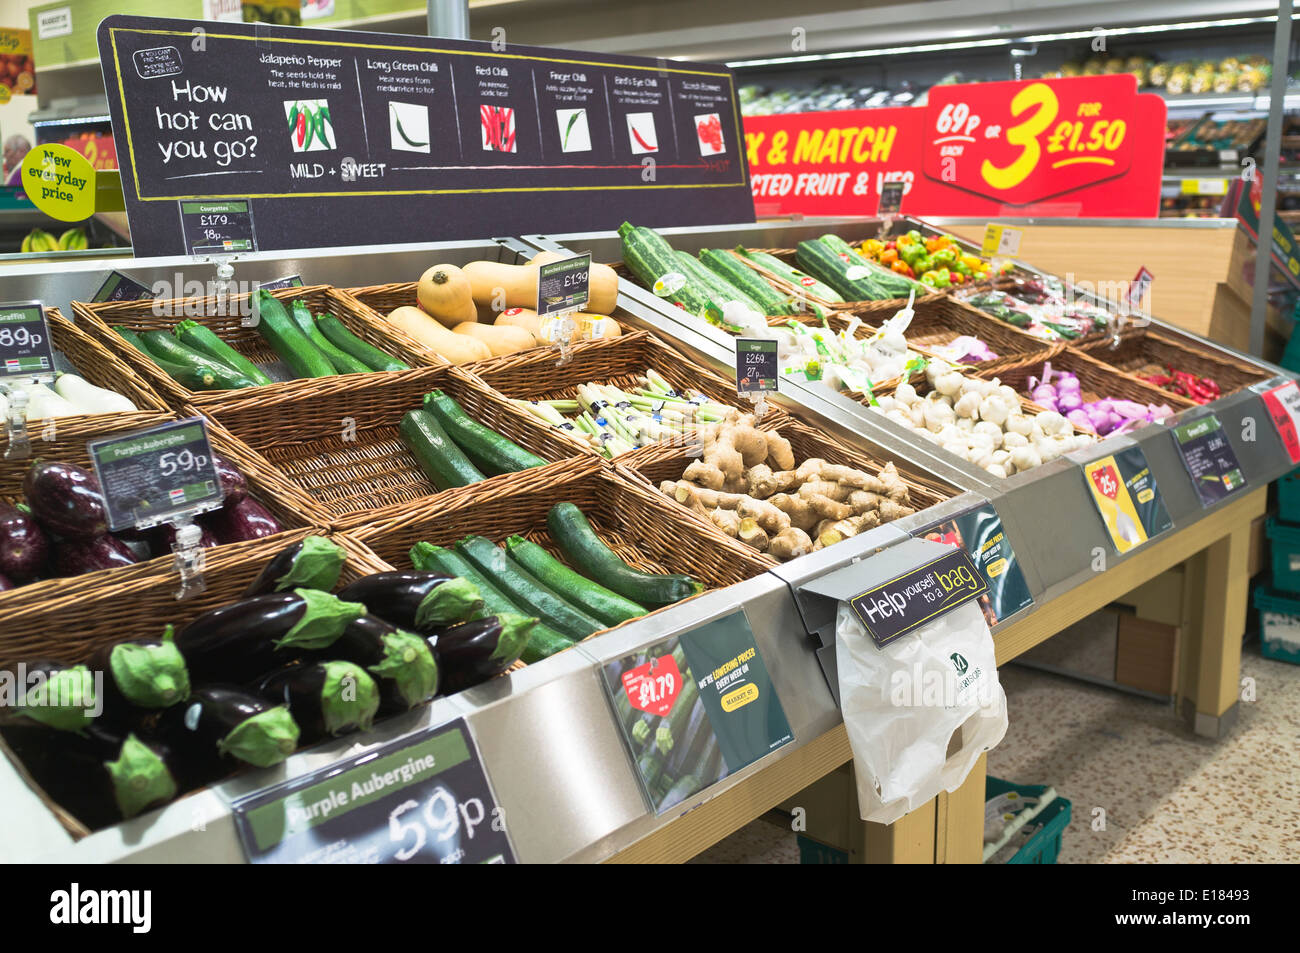 dh Morrisons Store LEBENSMITTELGESCHÄFT SUPERMARKT UK Scottish Gemüse produzieren Abschnitt Gemüse Regal Shop Regale schottland Innengang Stockfoto